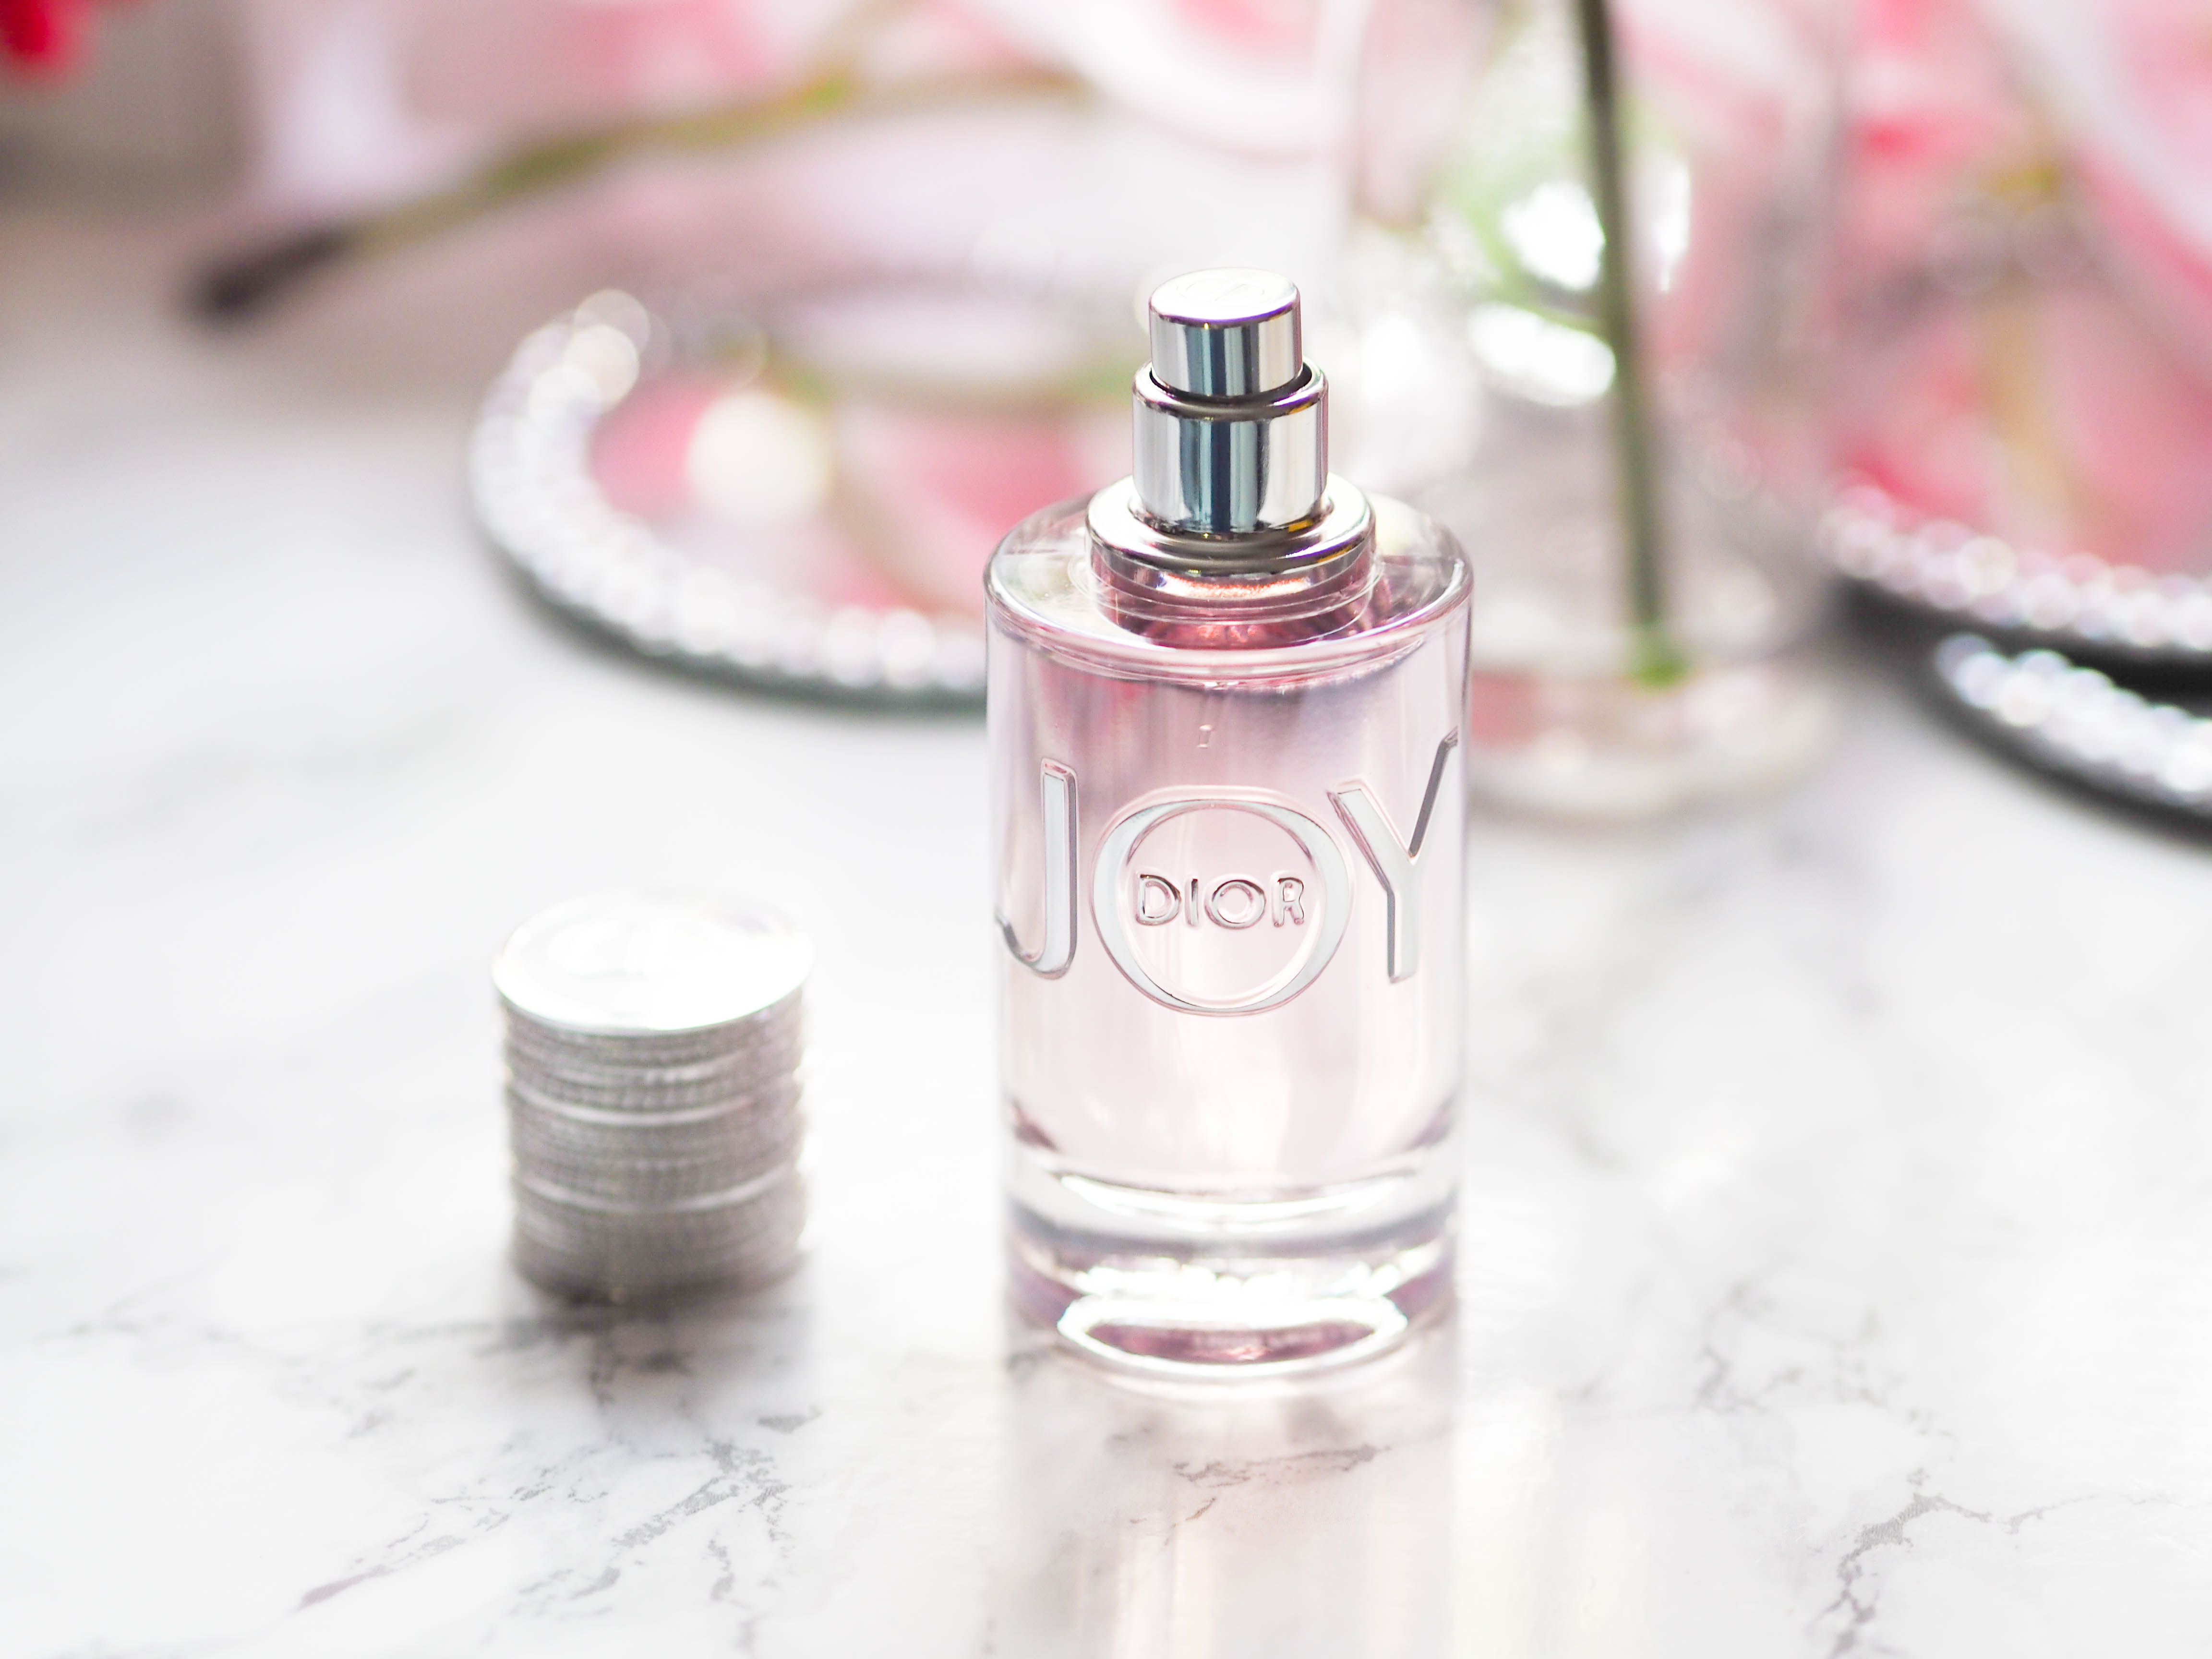 dior joy perfume review, OFF 74%,Buy!